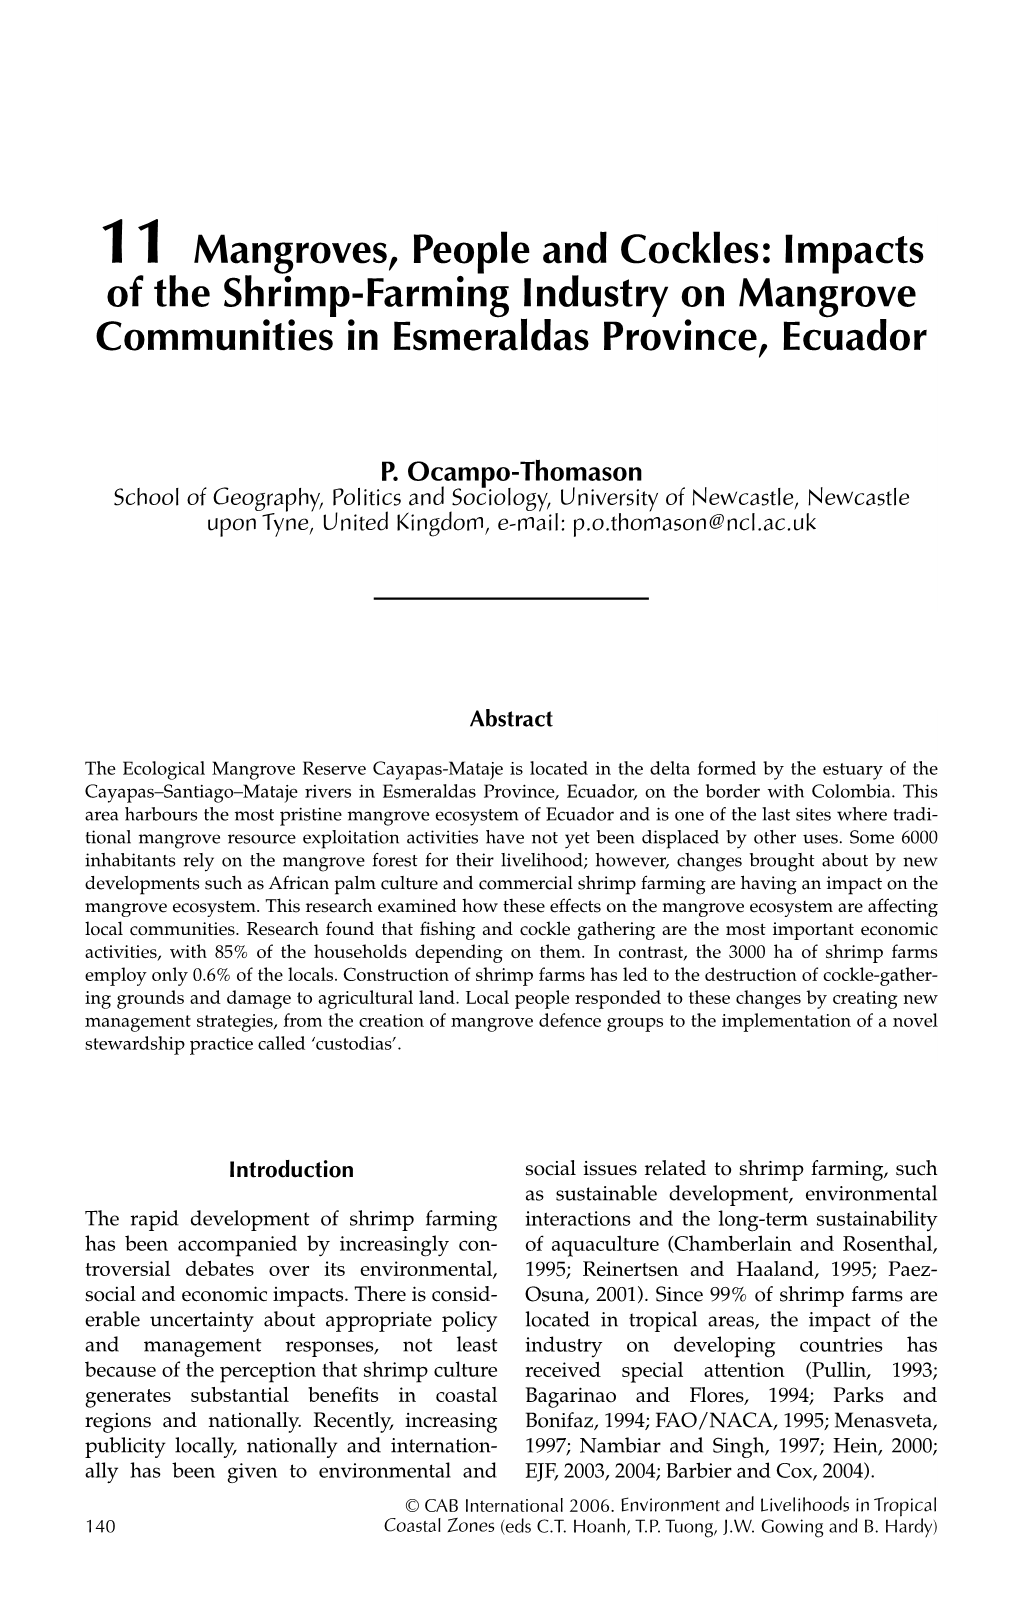 Impacts of the Shrimp-Farming Industry on Mangrove Communities in Esmeraldas Province, Ecuador